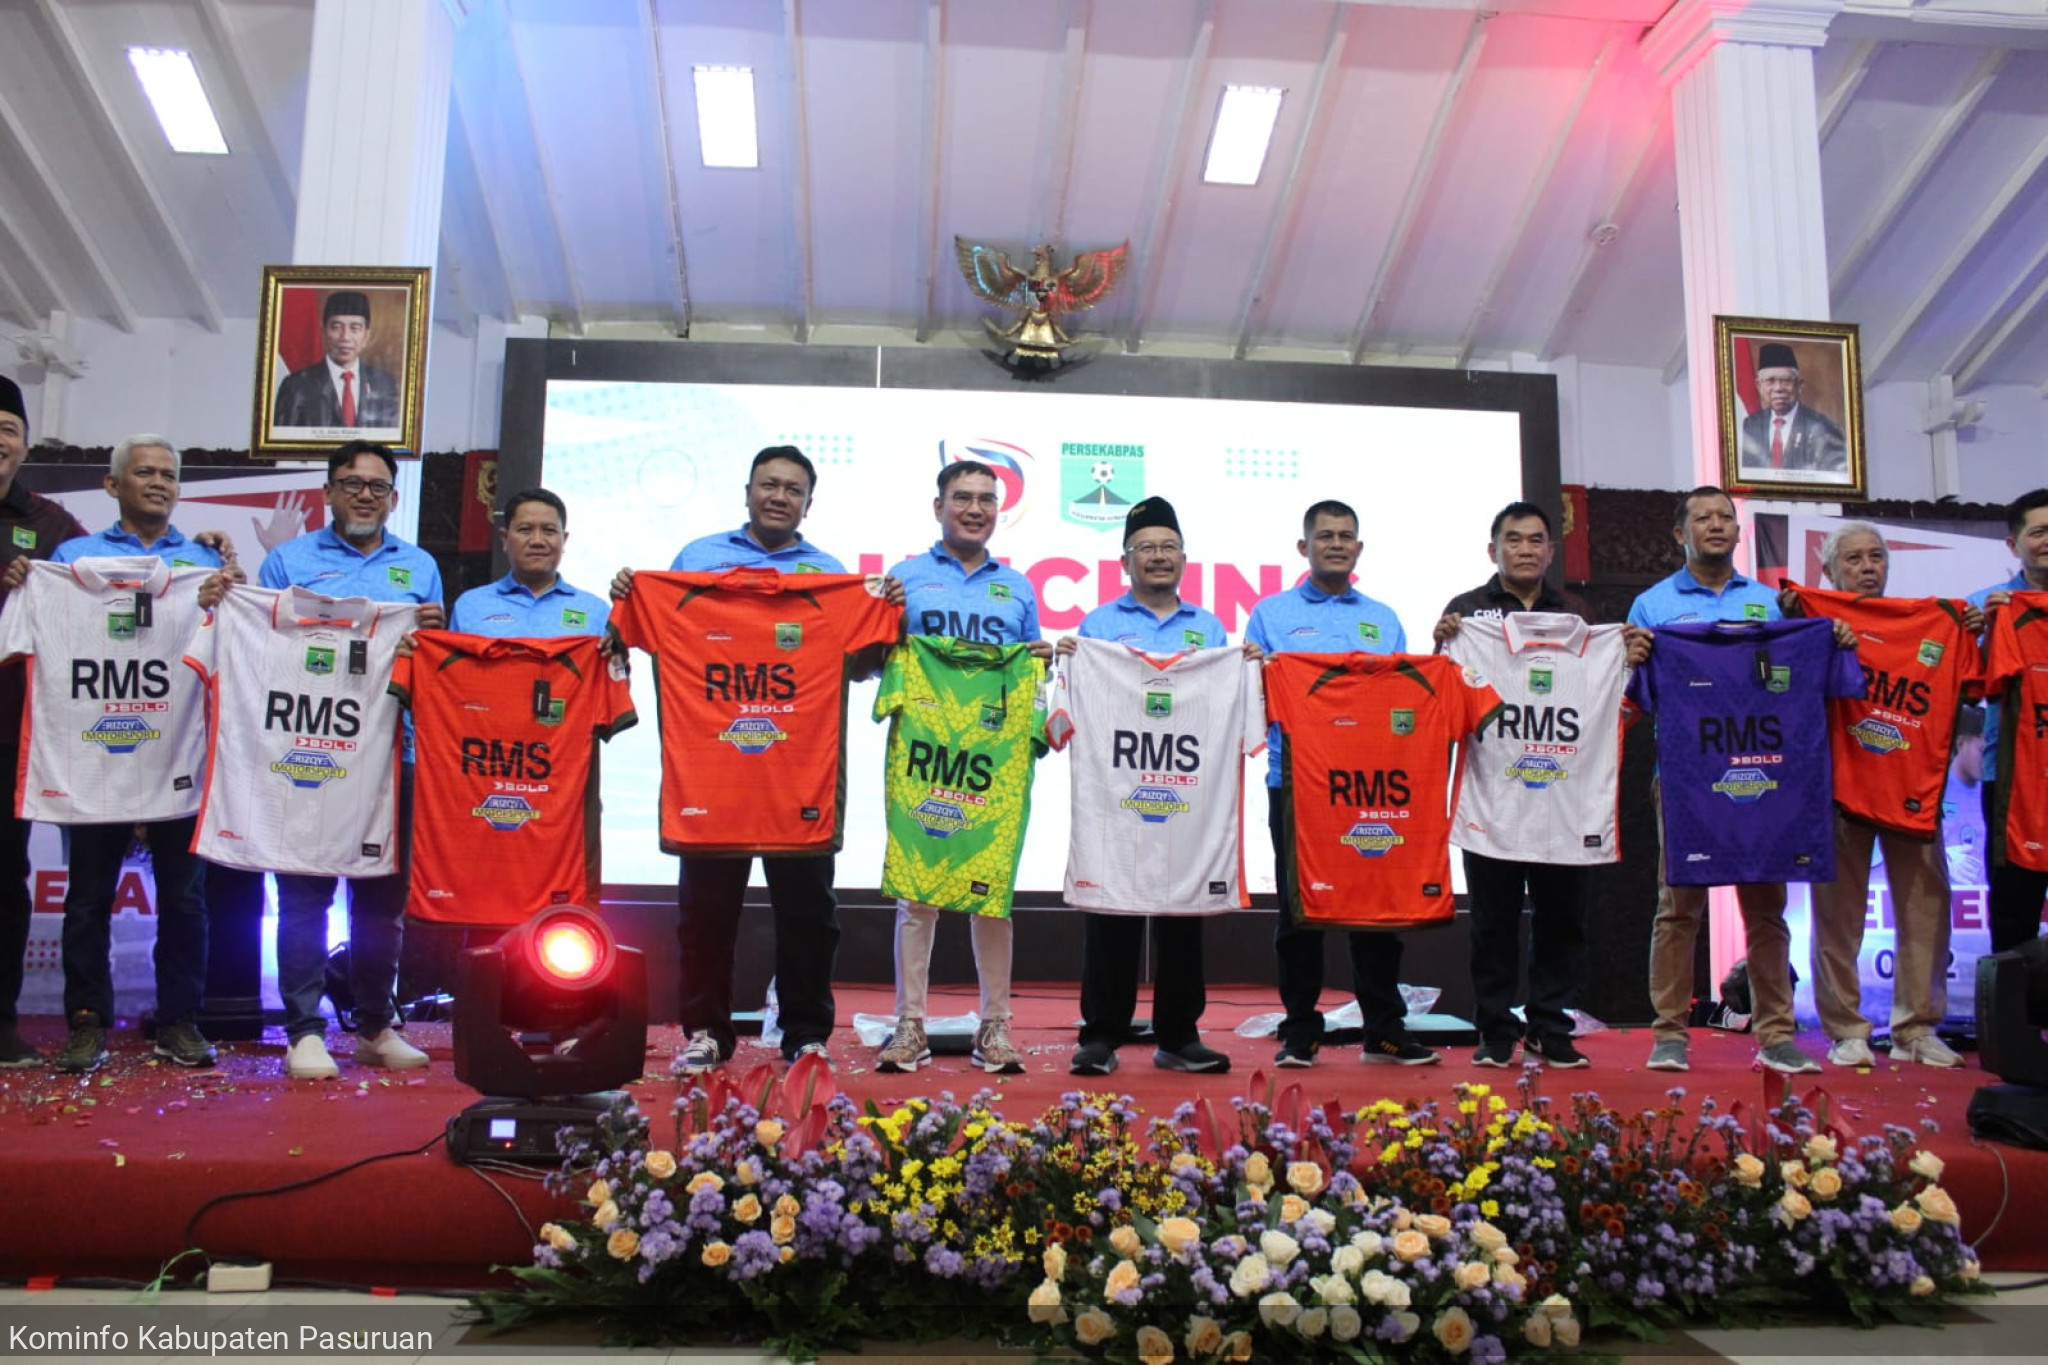 Launching Pemain dan Jersey Baru Persekabpas, Pj. Bupati Pasuruan Optimis Persekabpas Berpeluang jadi Jawara